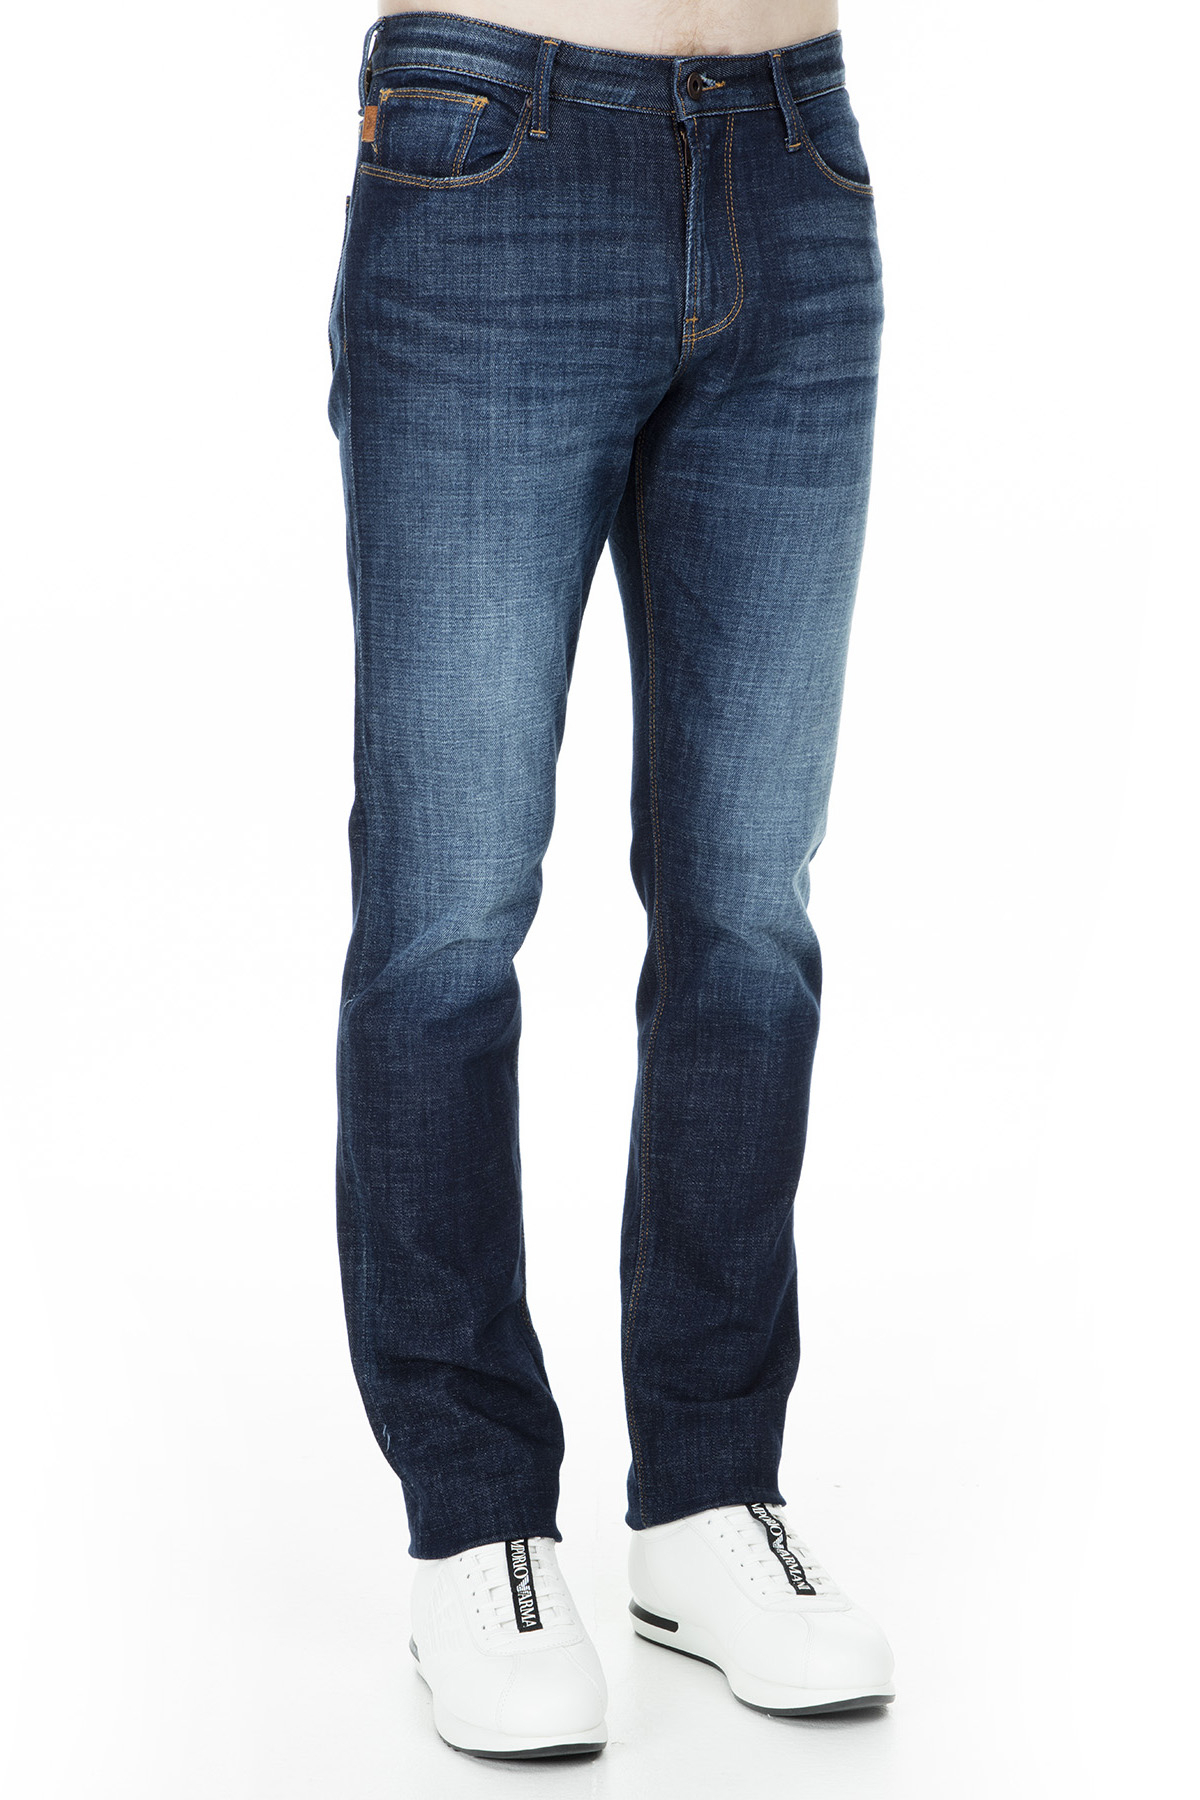 Emporio Armani J06 Jeans Erkek Kot Pantolon S 3G1J06 1D3GZ 941 LACİVERT